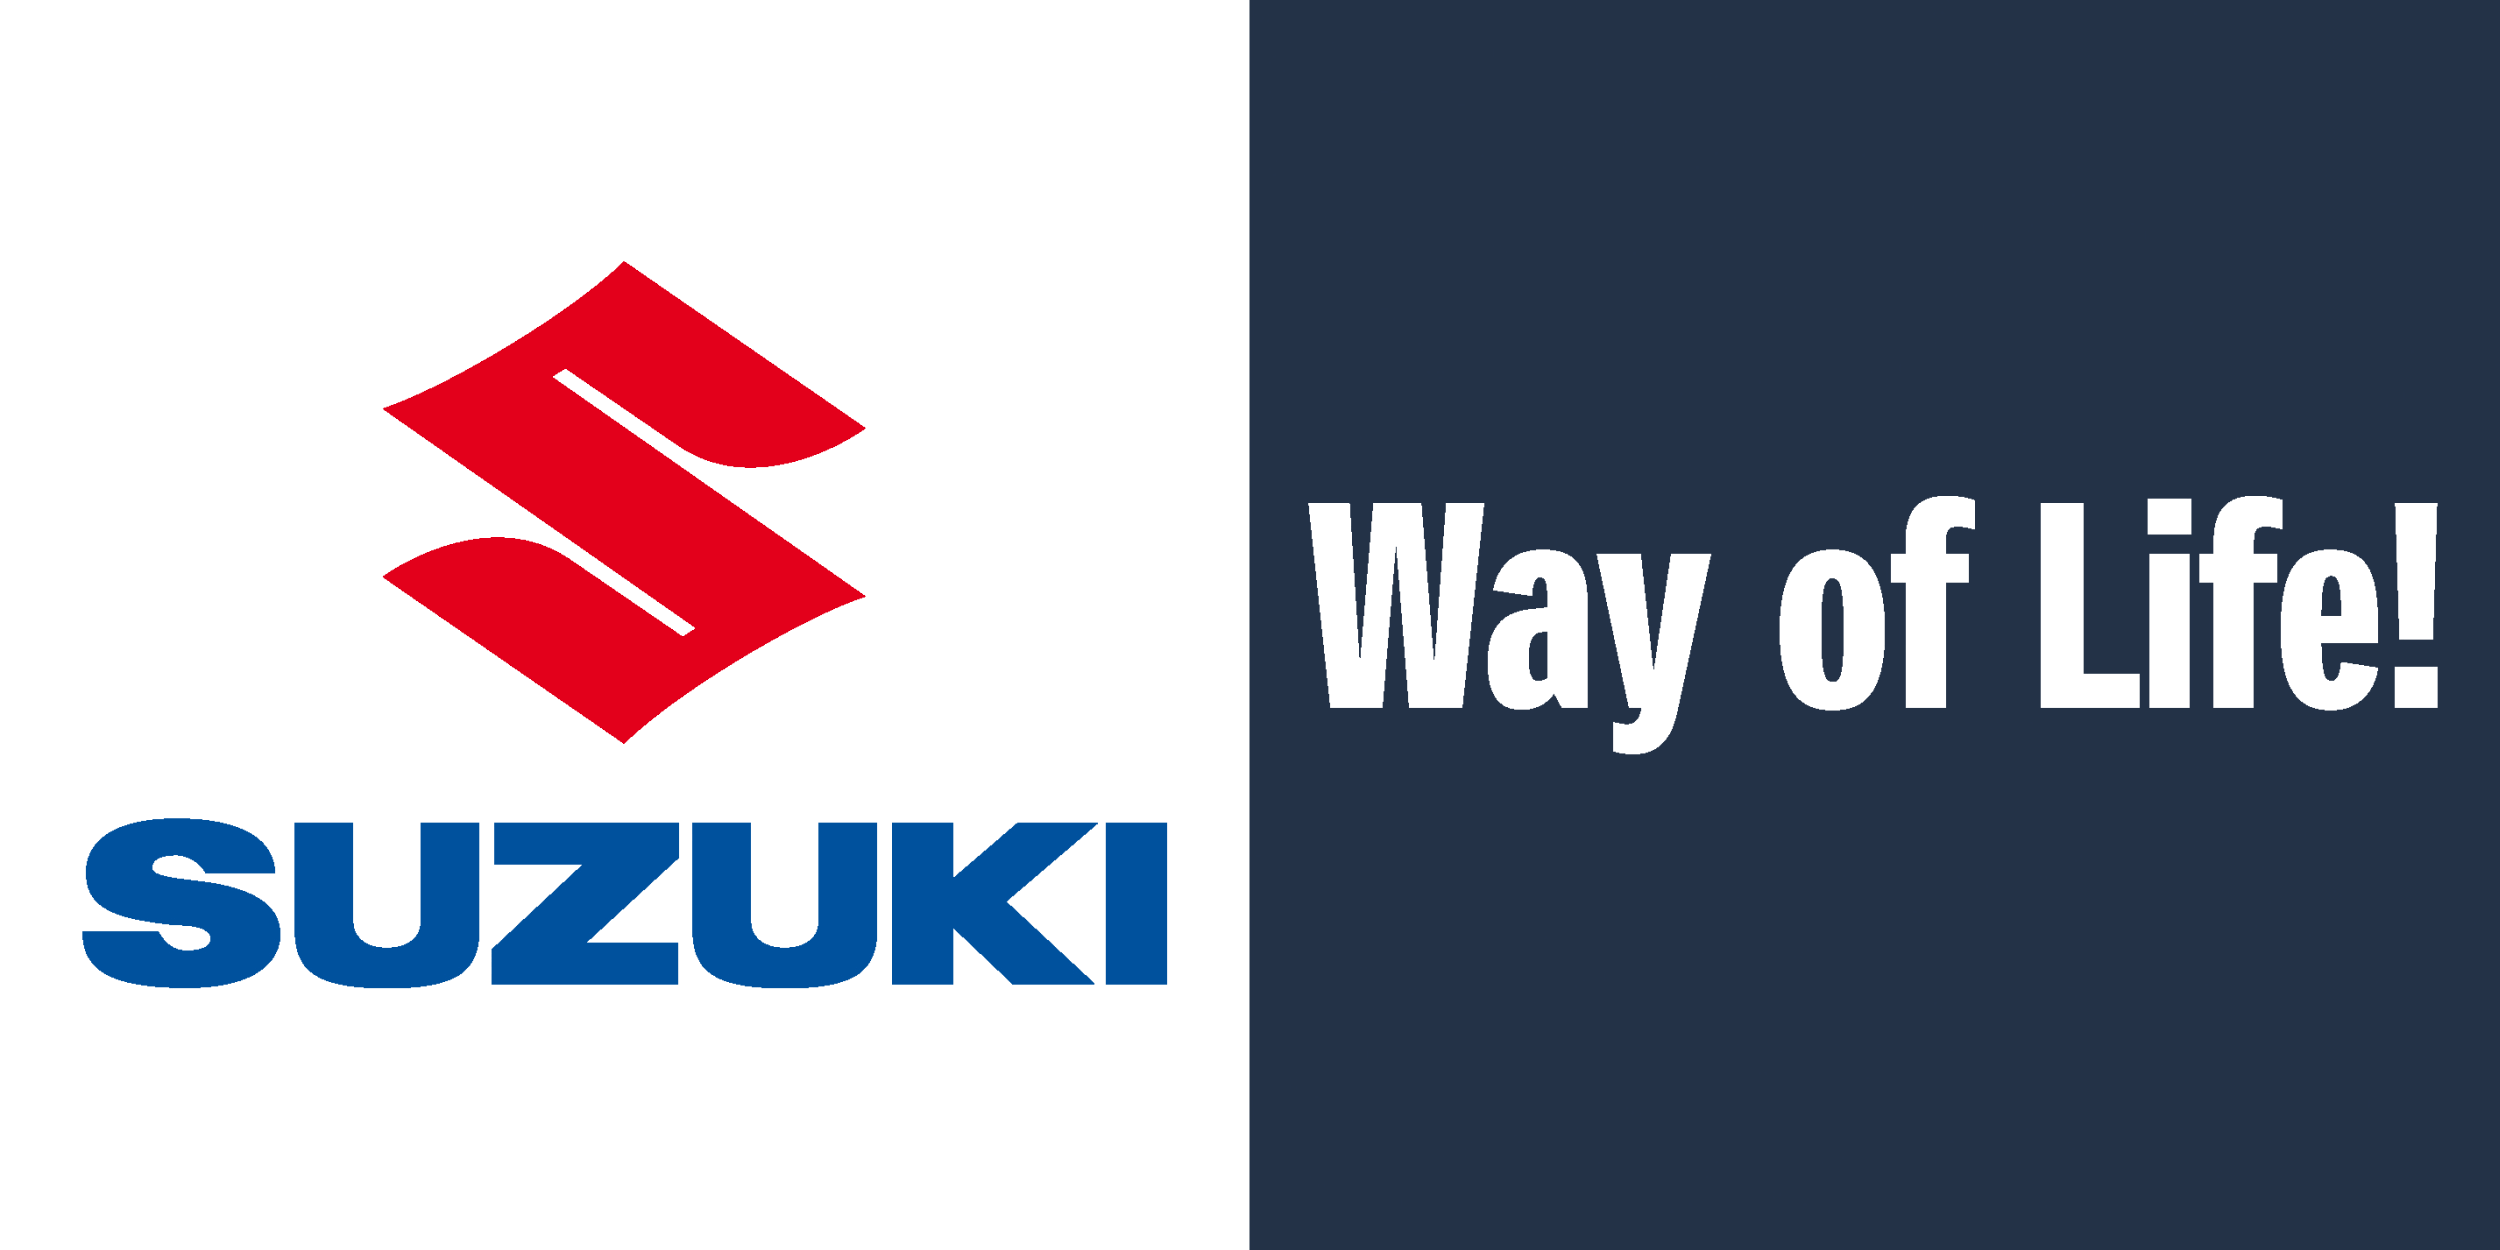 Suzuki Way Of Life - KibrisPDR